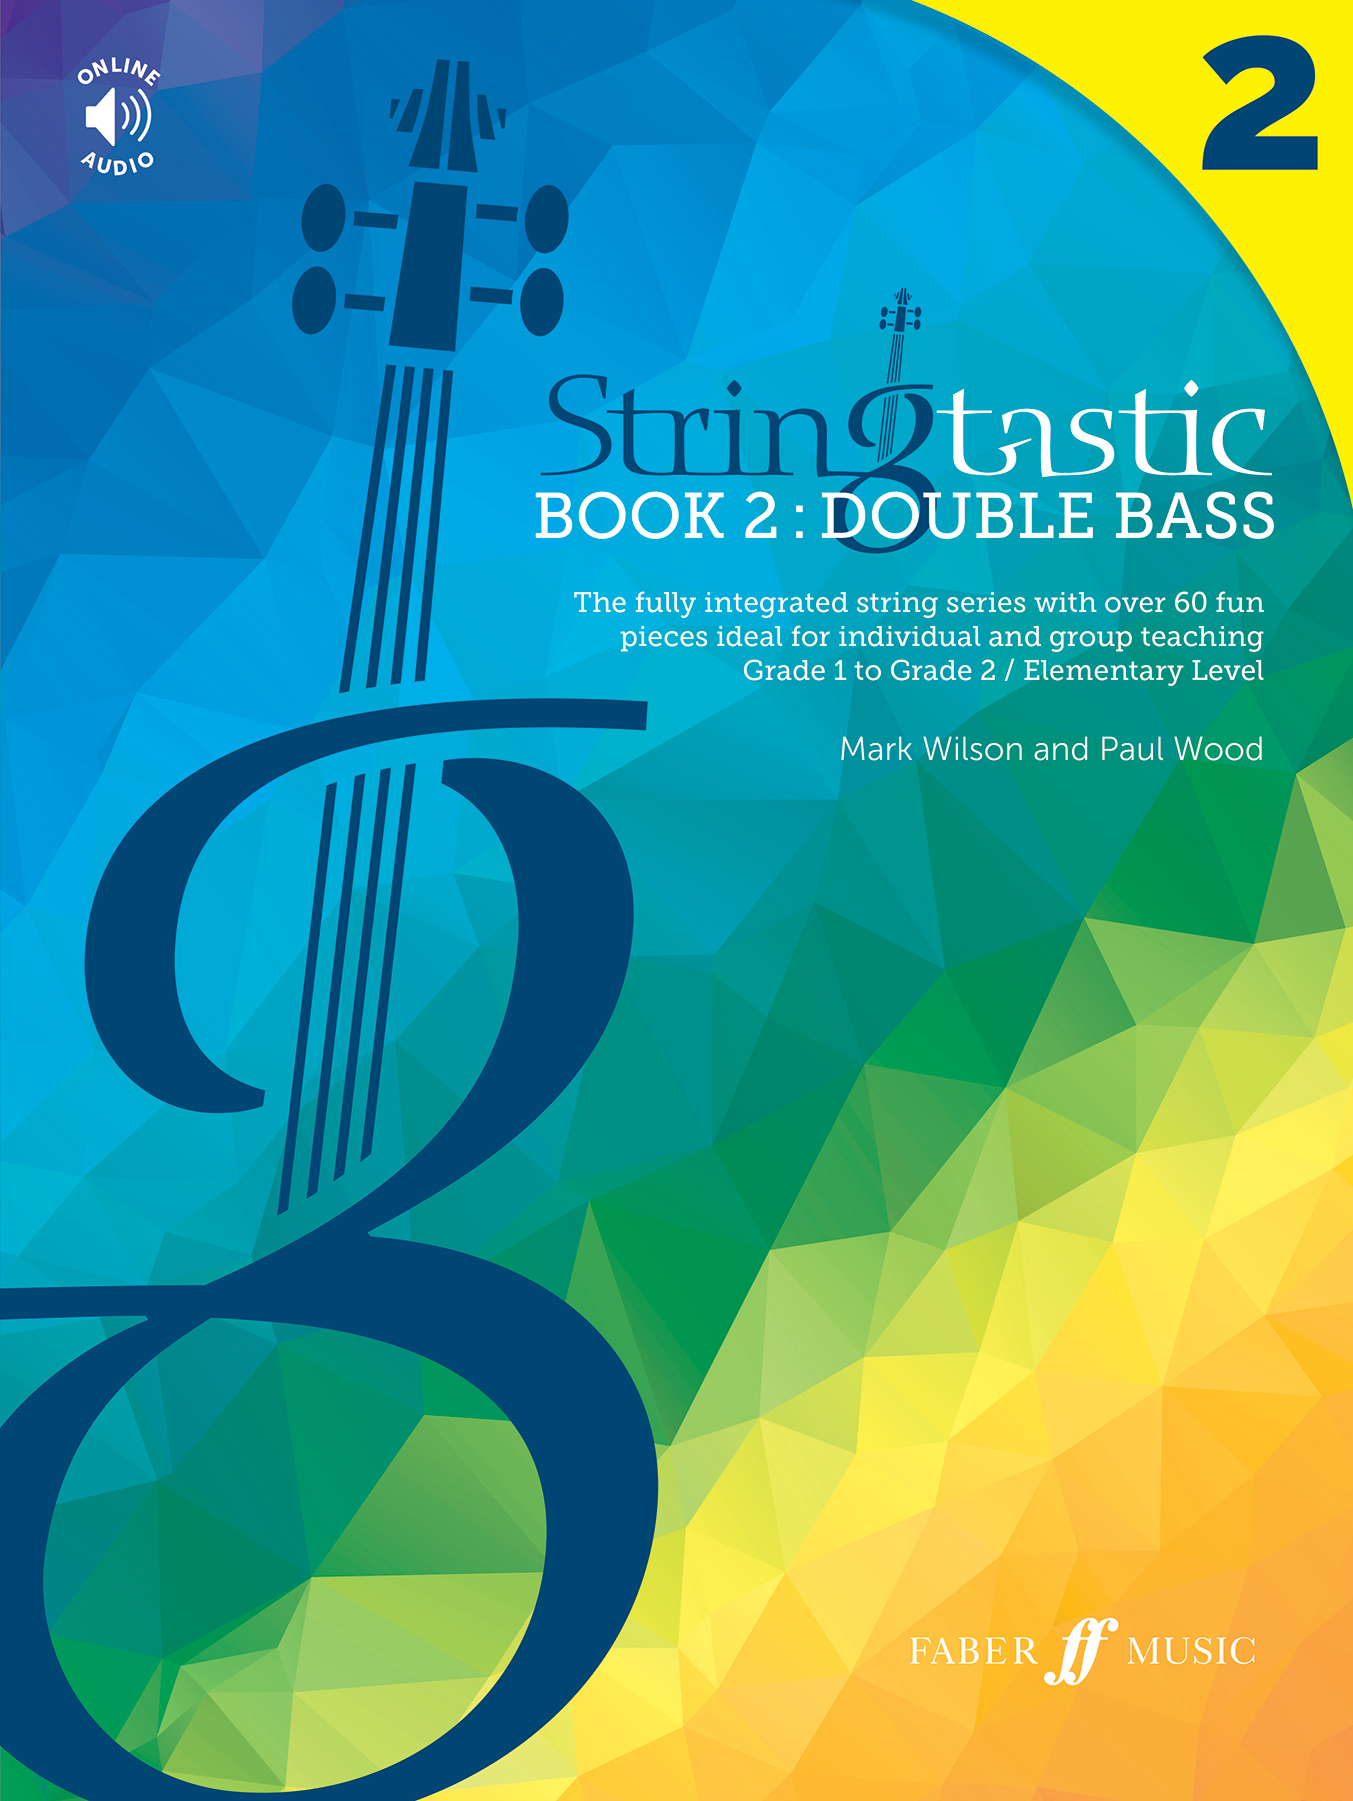 Stringtastic Book 2 Double Bass Sheet Music Songbook